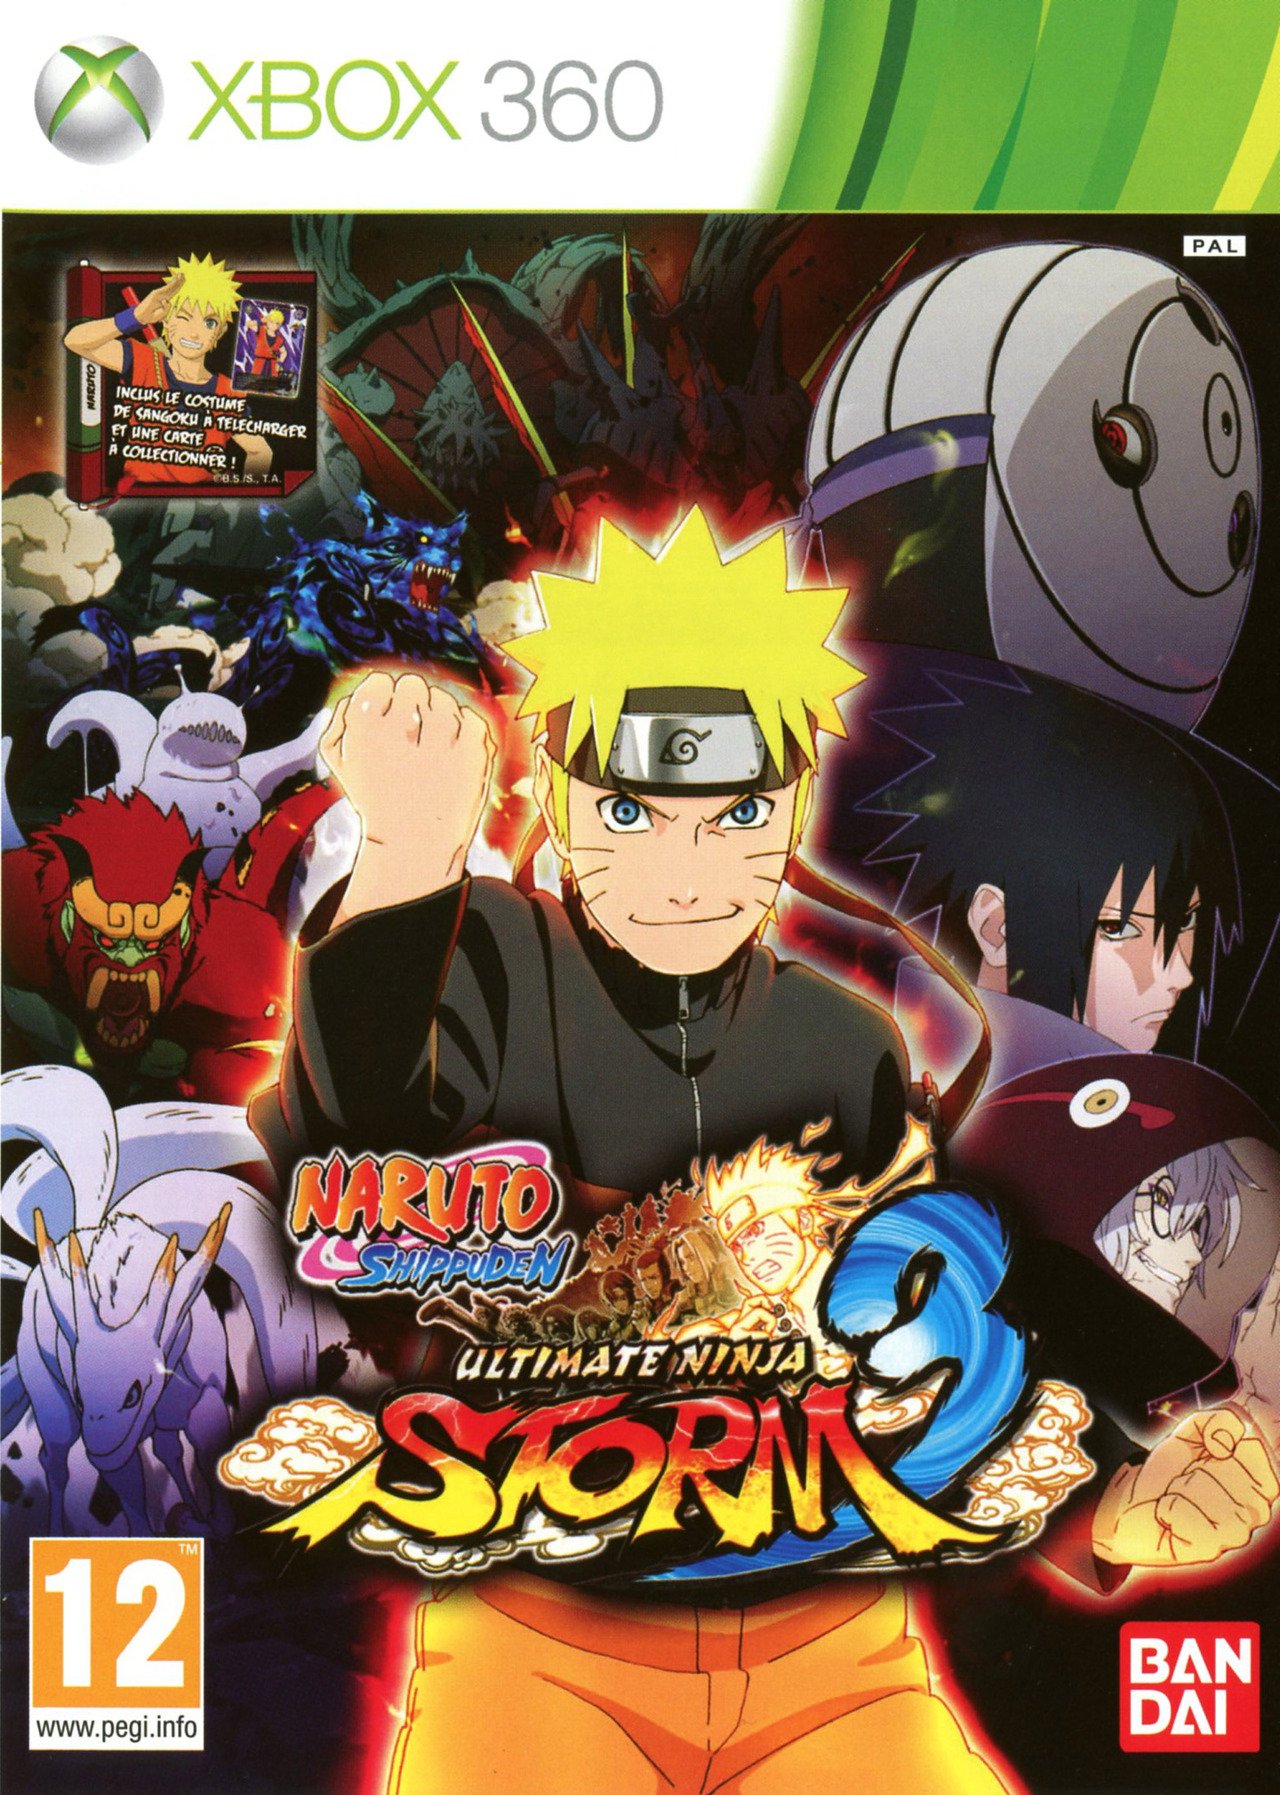 Caratula de Naruto Shippuden: Ultimate Ninja Storm 3 para Xbox 360